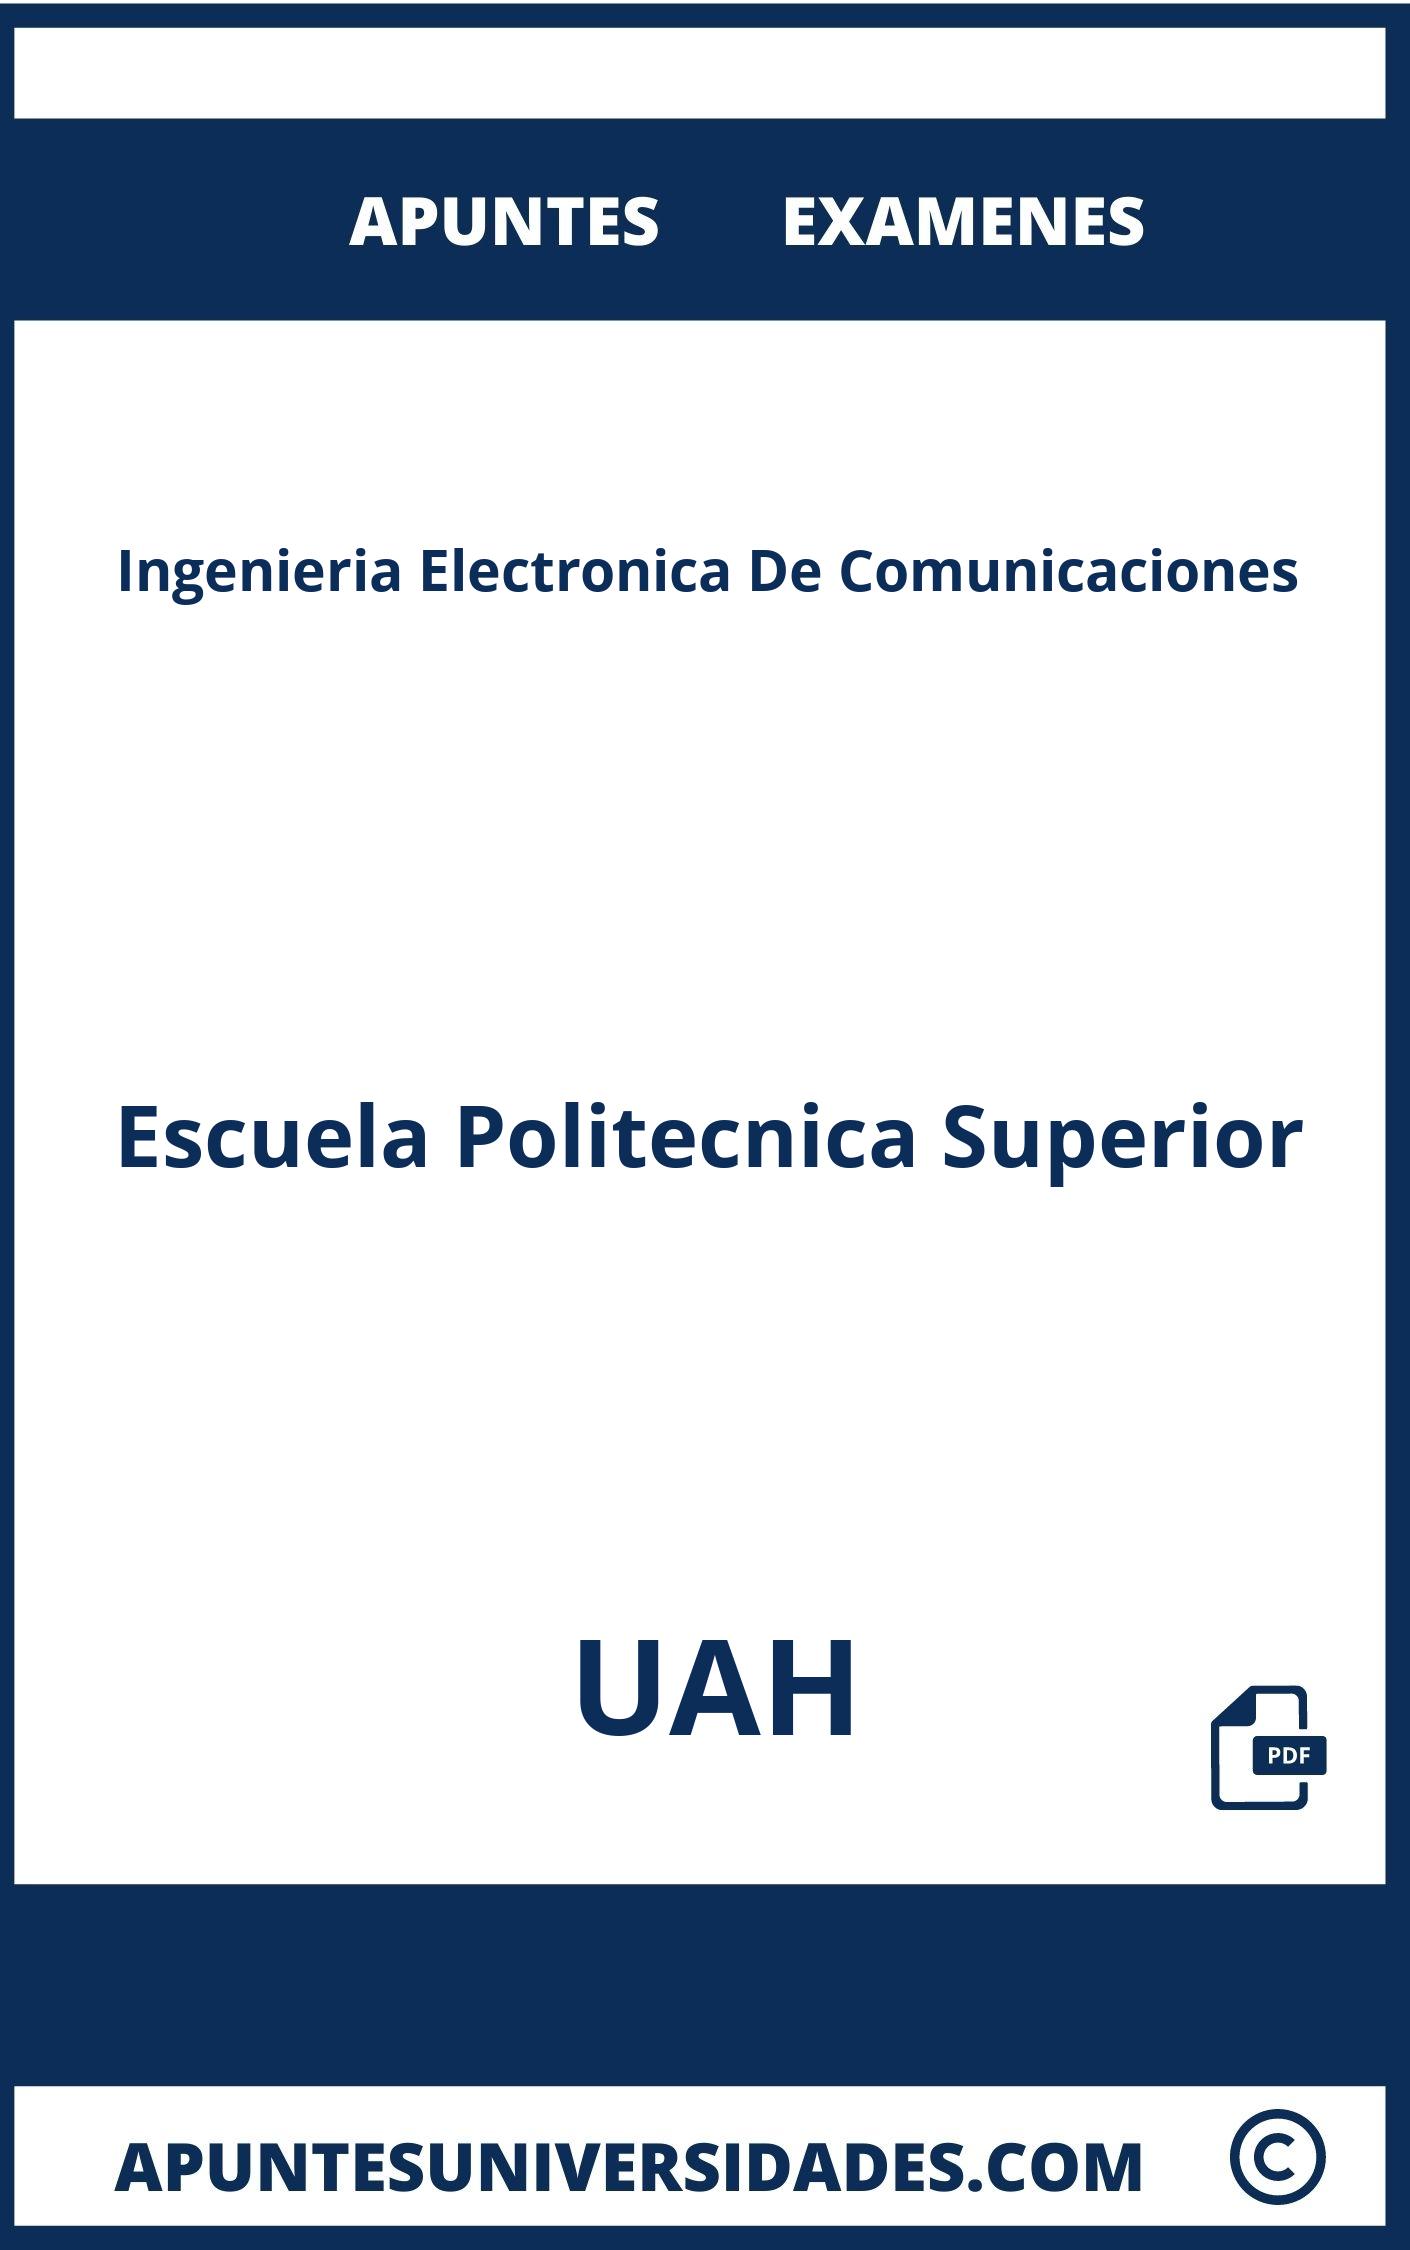 Examenes Apuntes Ingenieria Electronica De Comunicaciones UAH